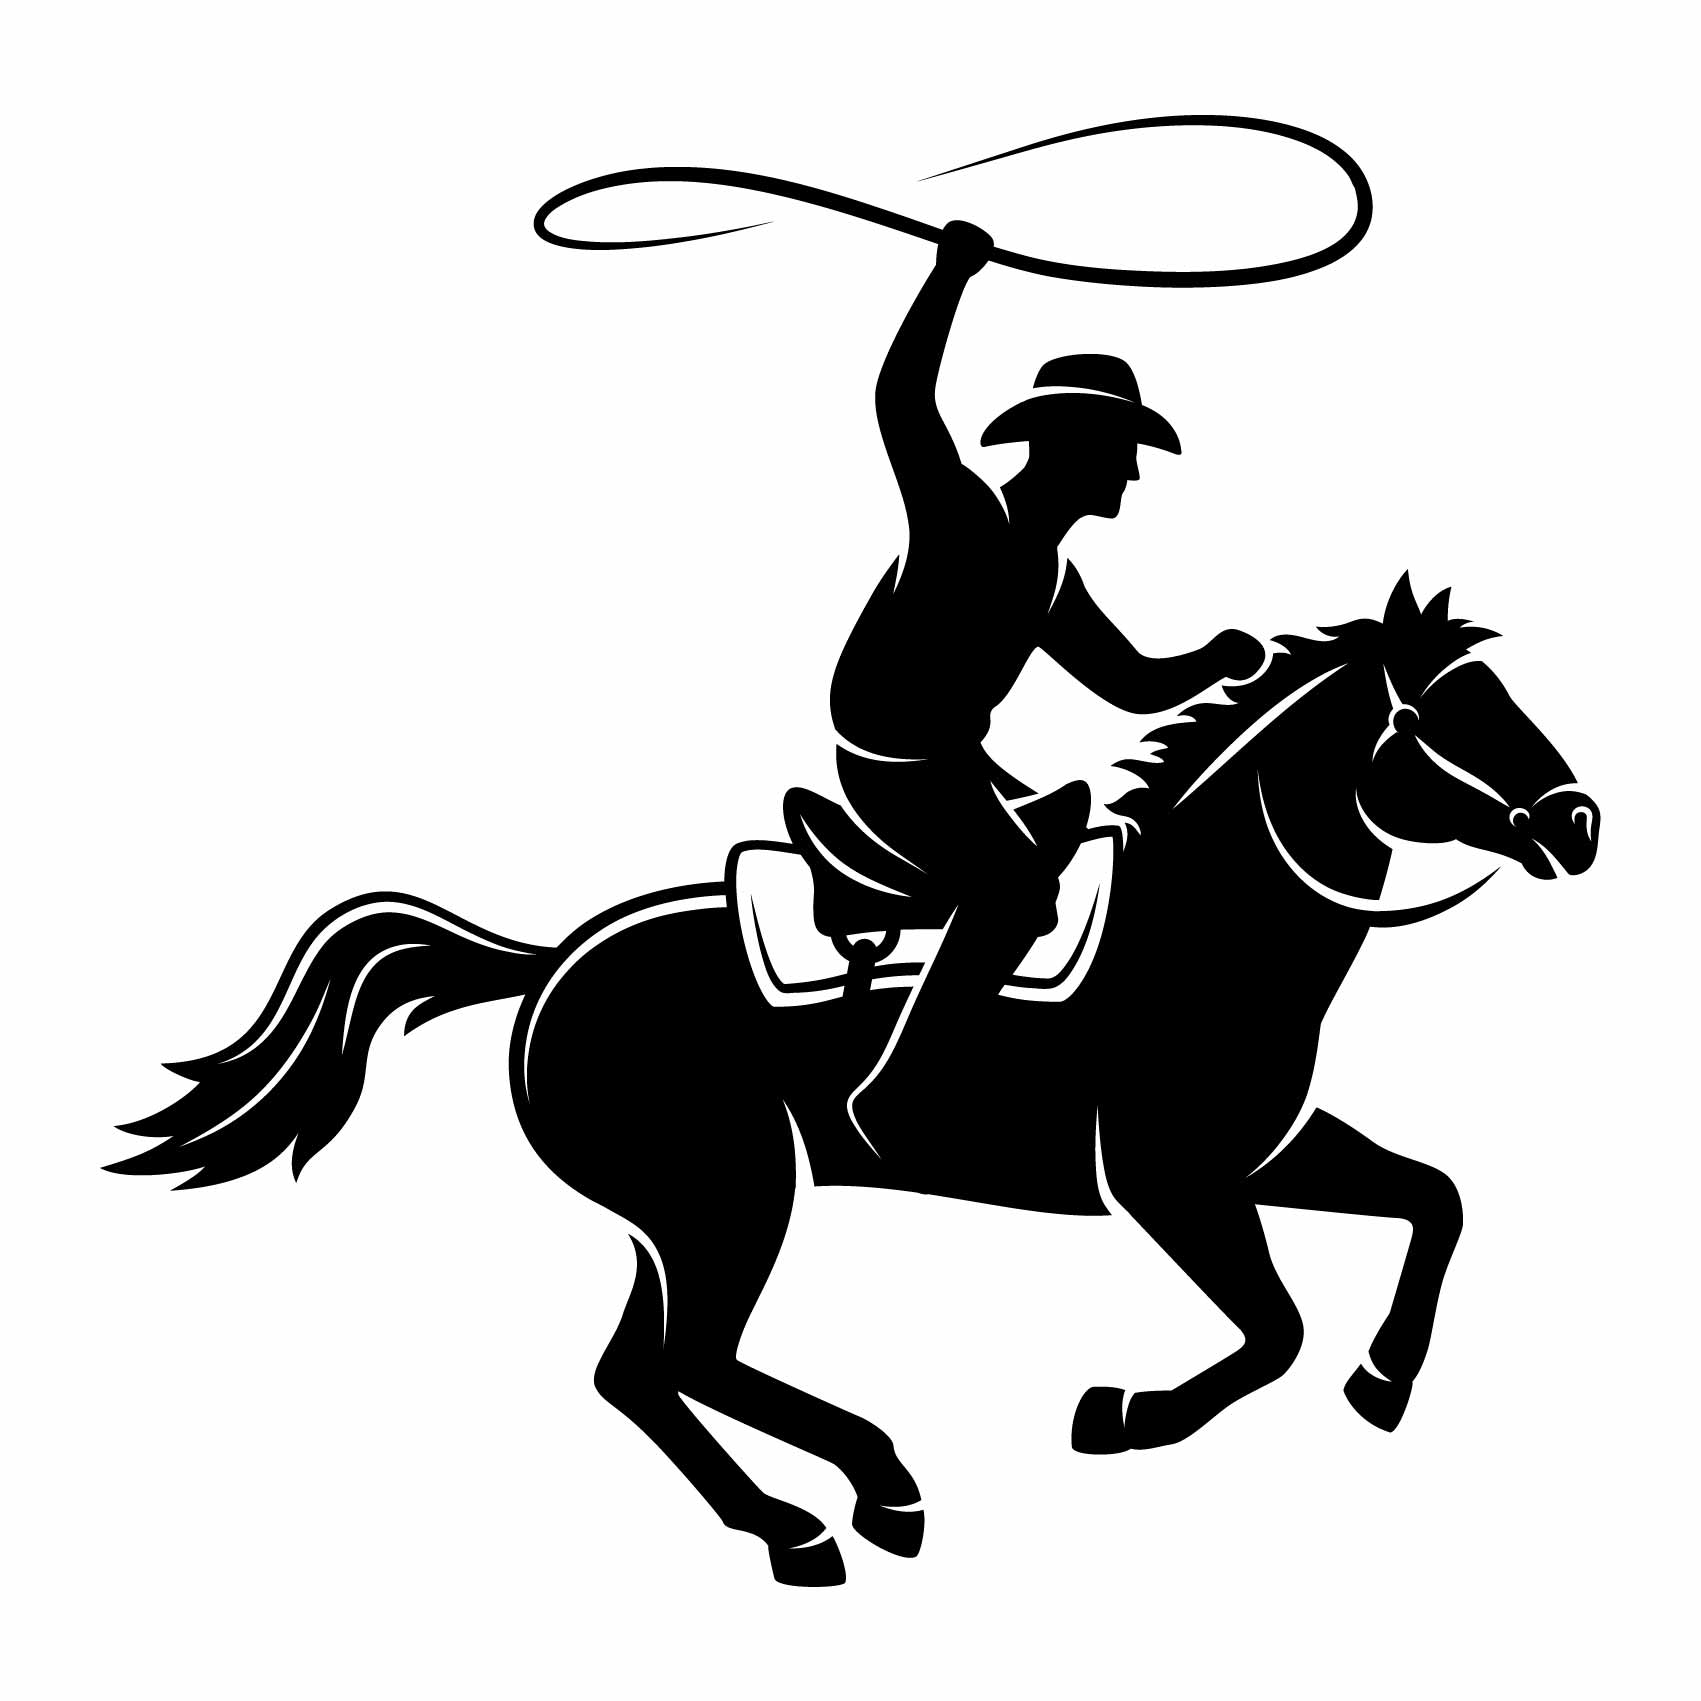 stickers-cowboy-cheval-lasso-ref2cowboy-autocollant-muraux-cow-boy-sticker-western-chambre-enfant-garçon-cheval-lasso-(2)